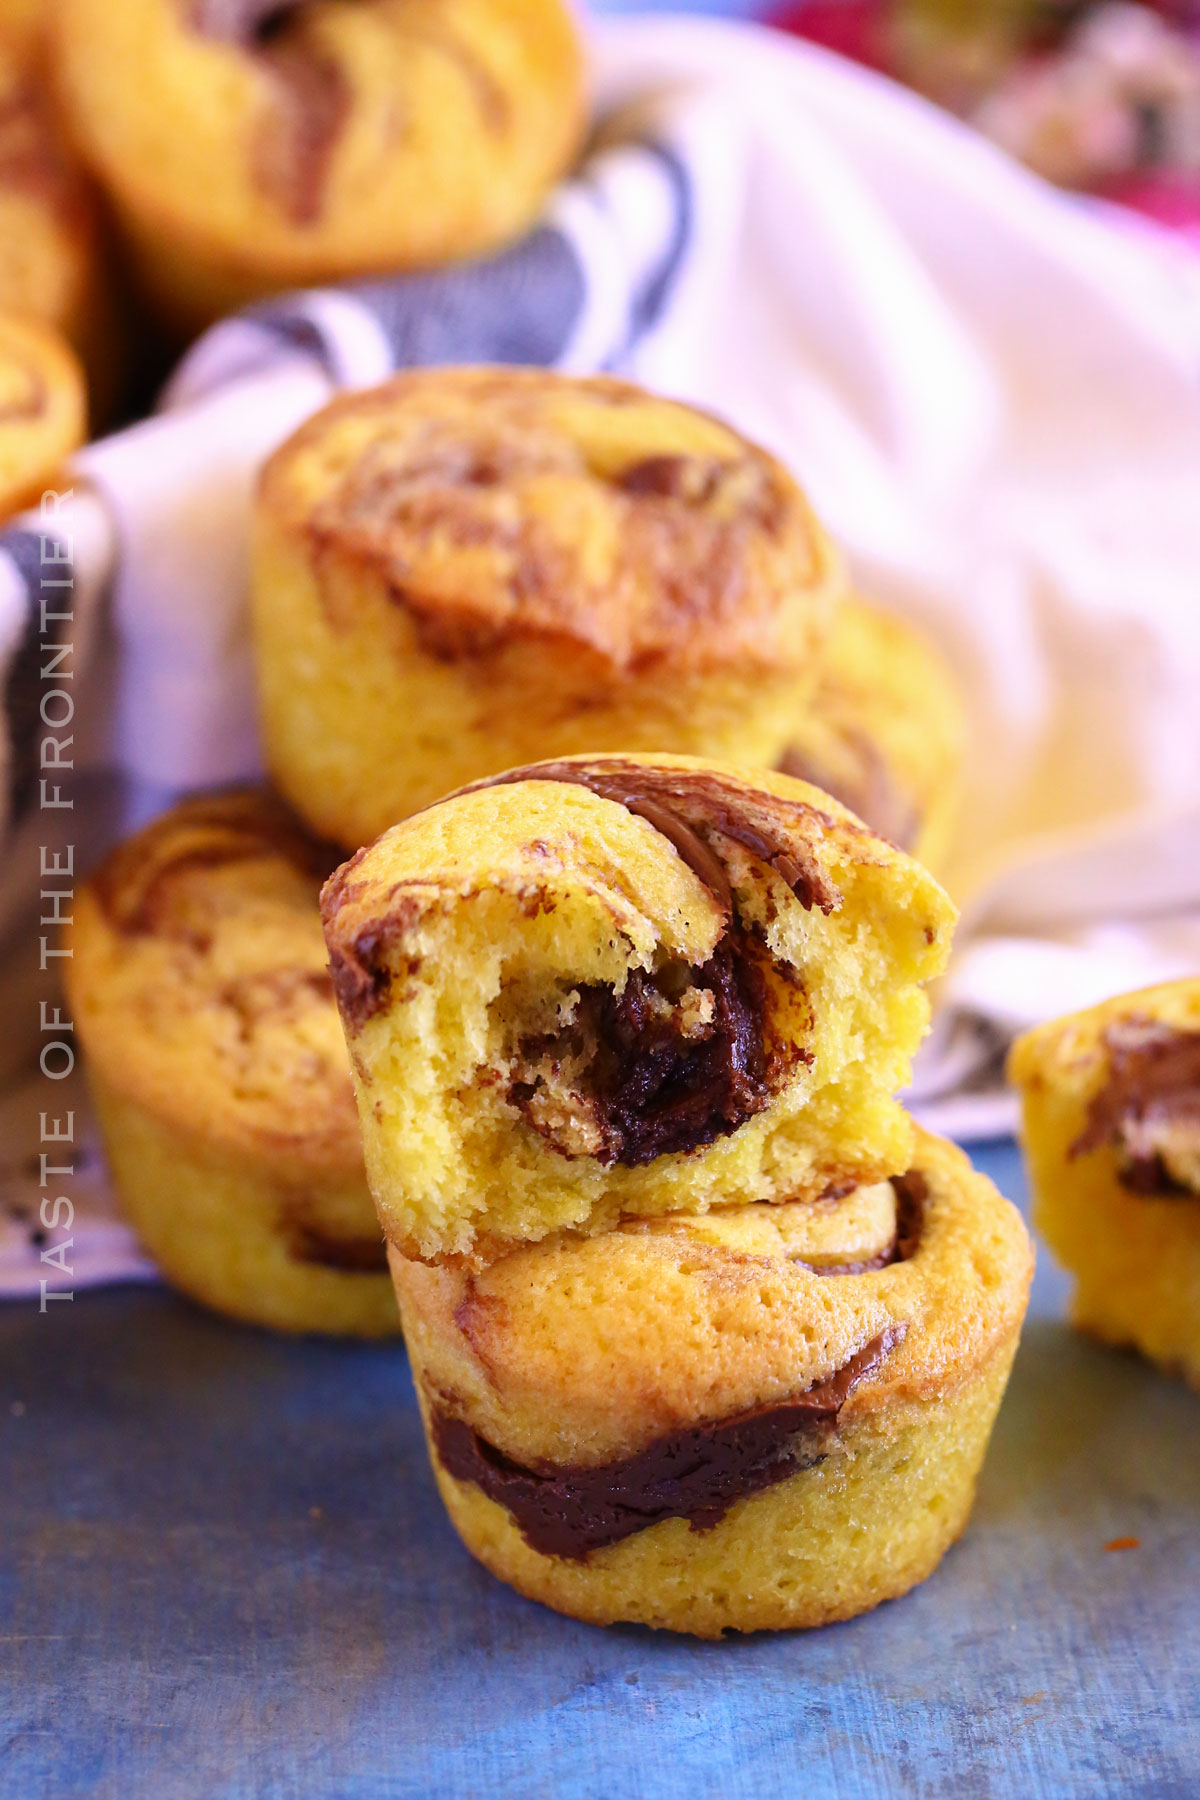 hazelnut spread inside the muffins